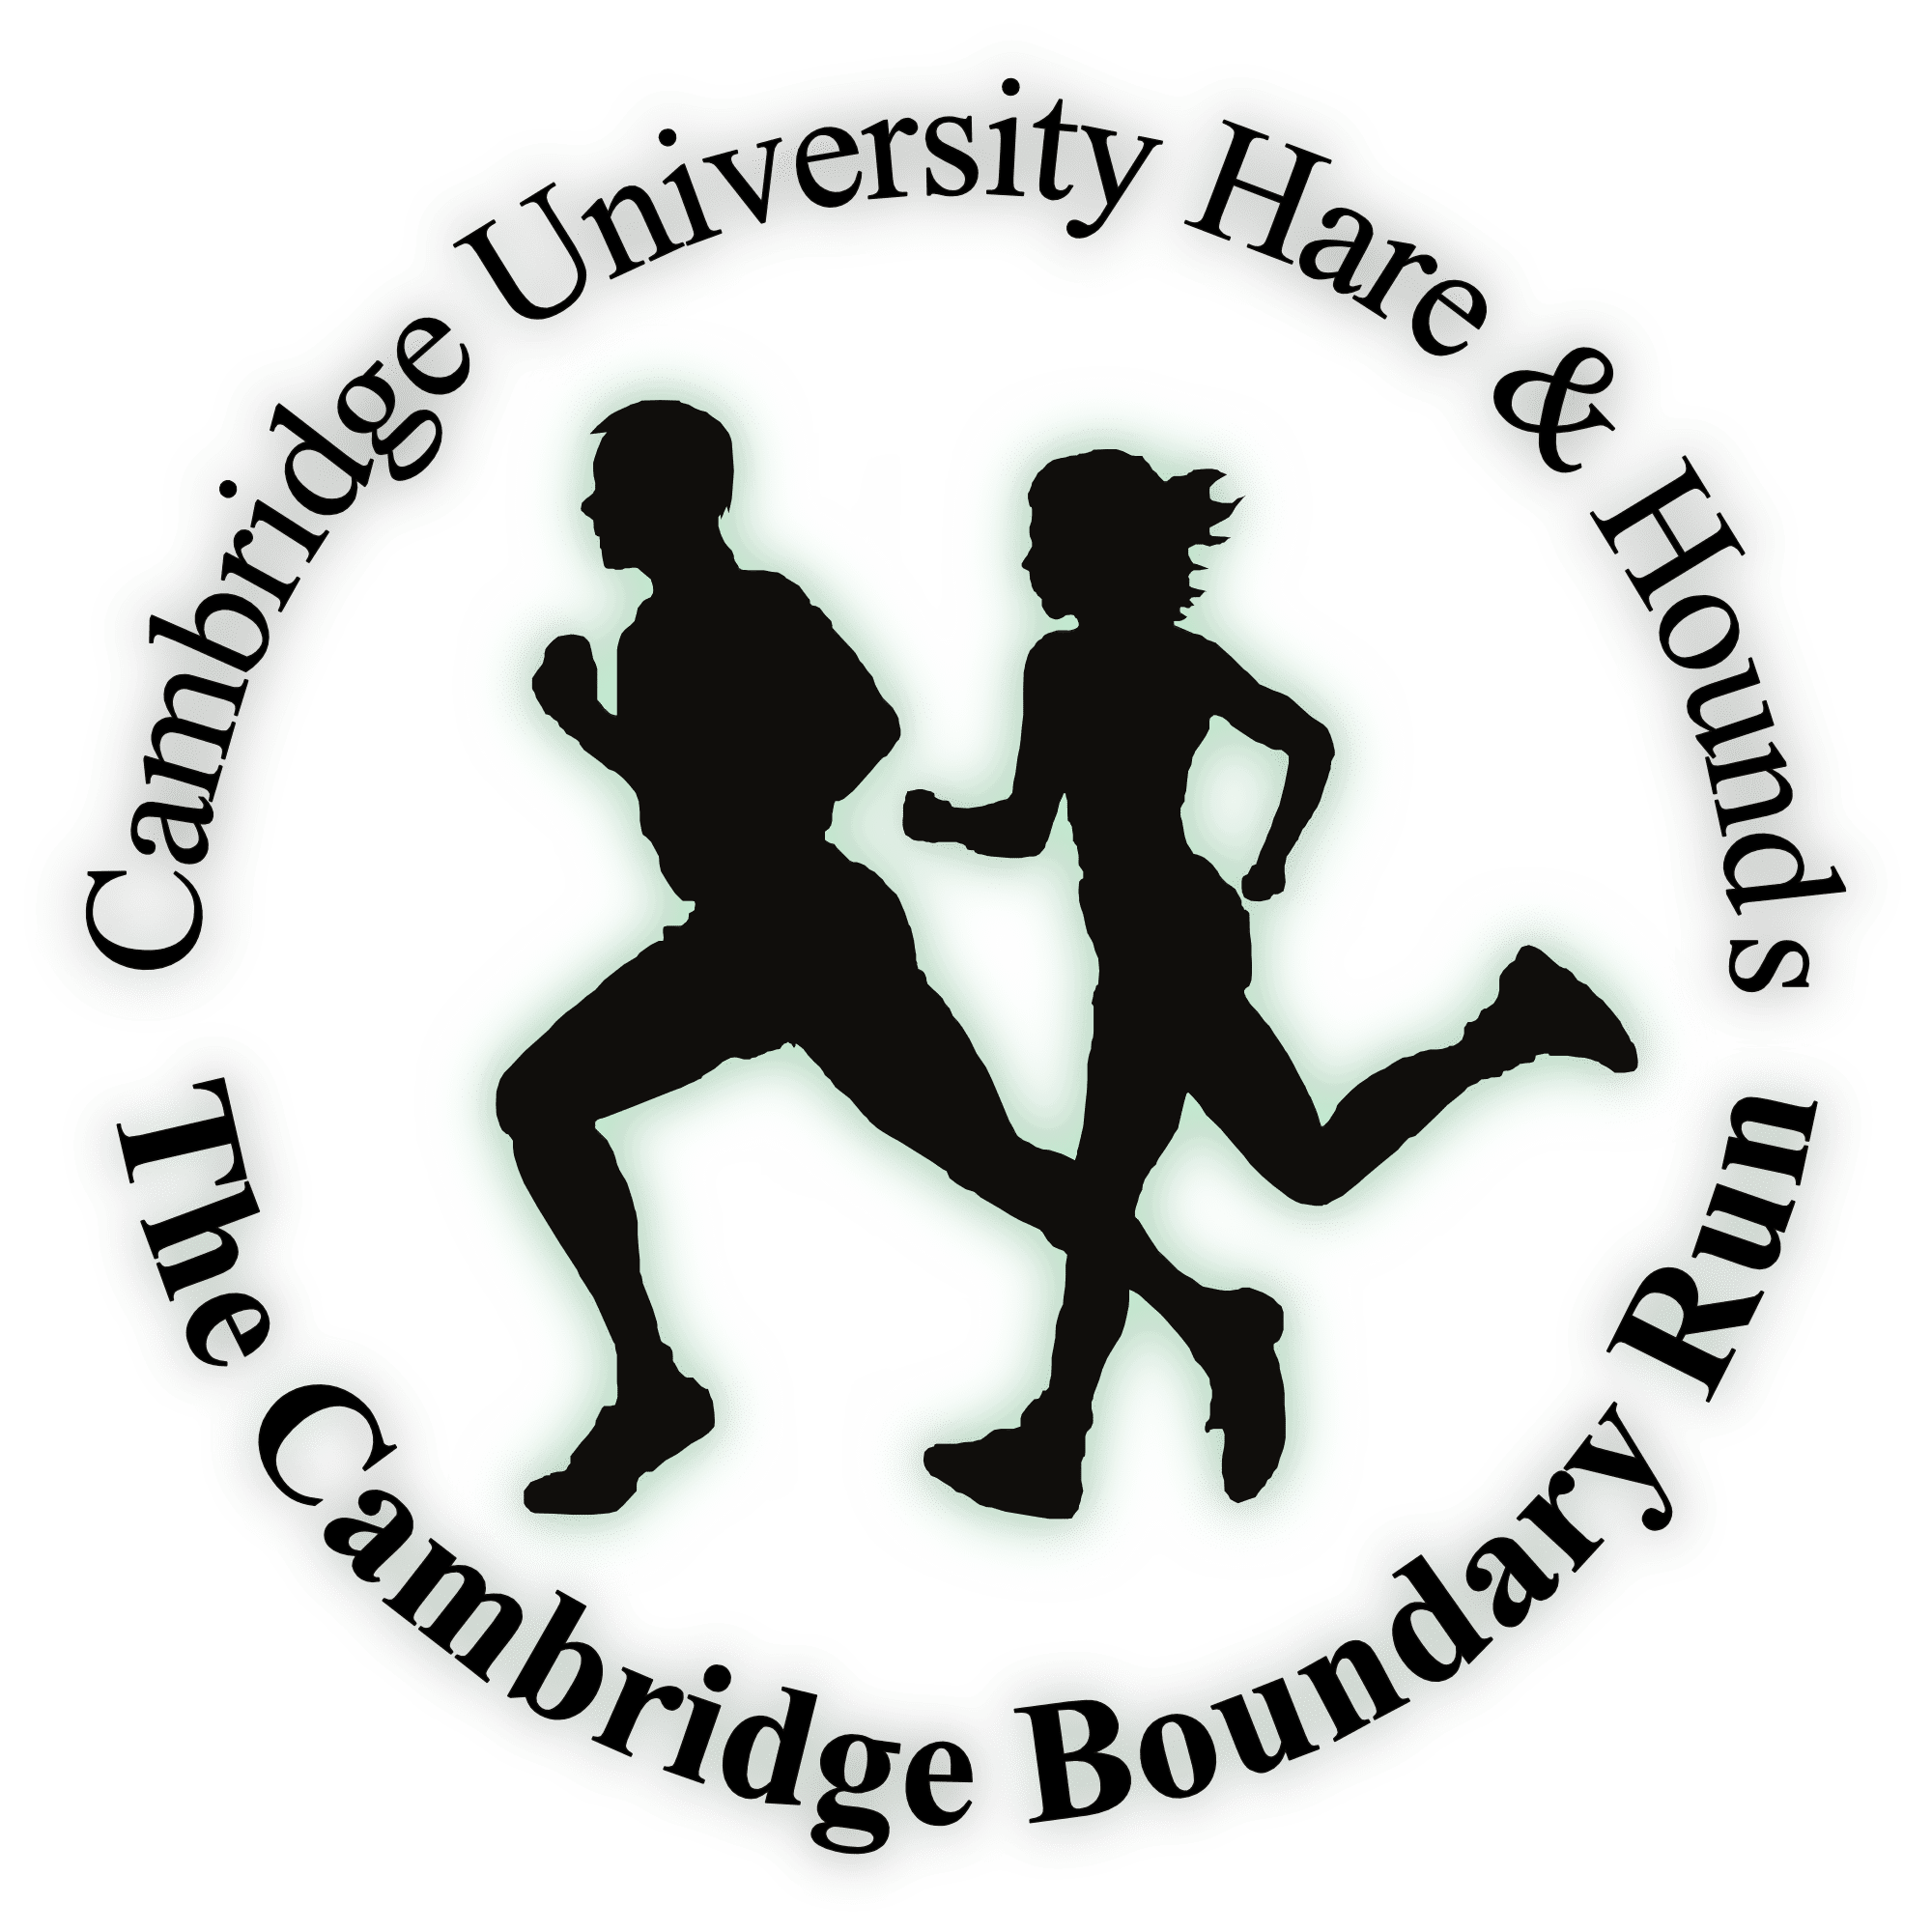 Cambridge Boundary Run logo on RaceRaves